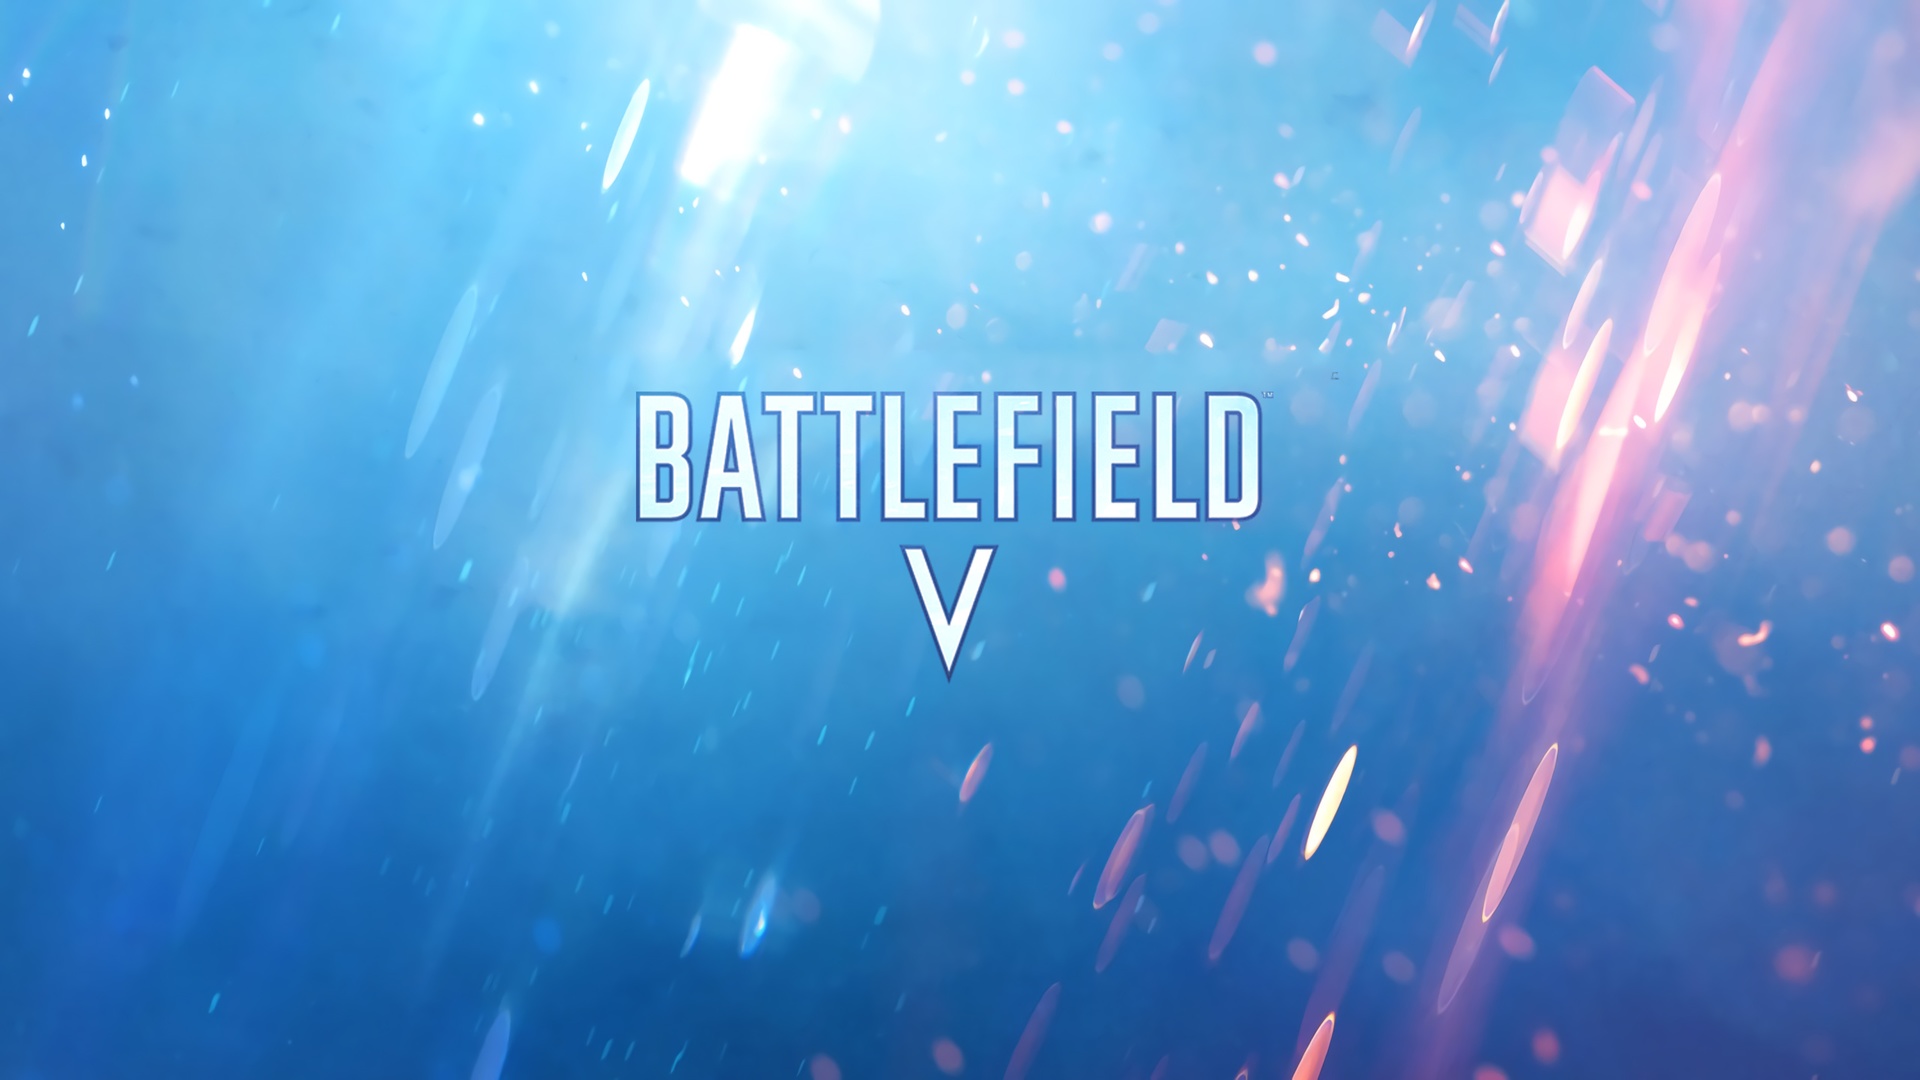 Battlefield V - fond d'écran.jpg